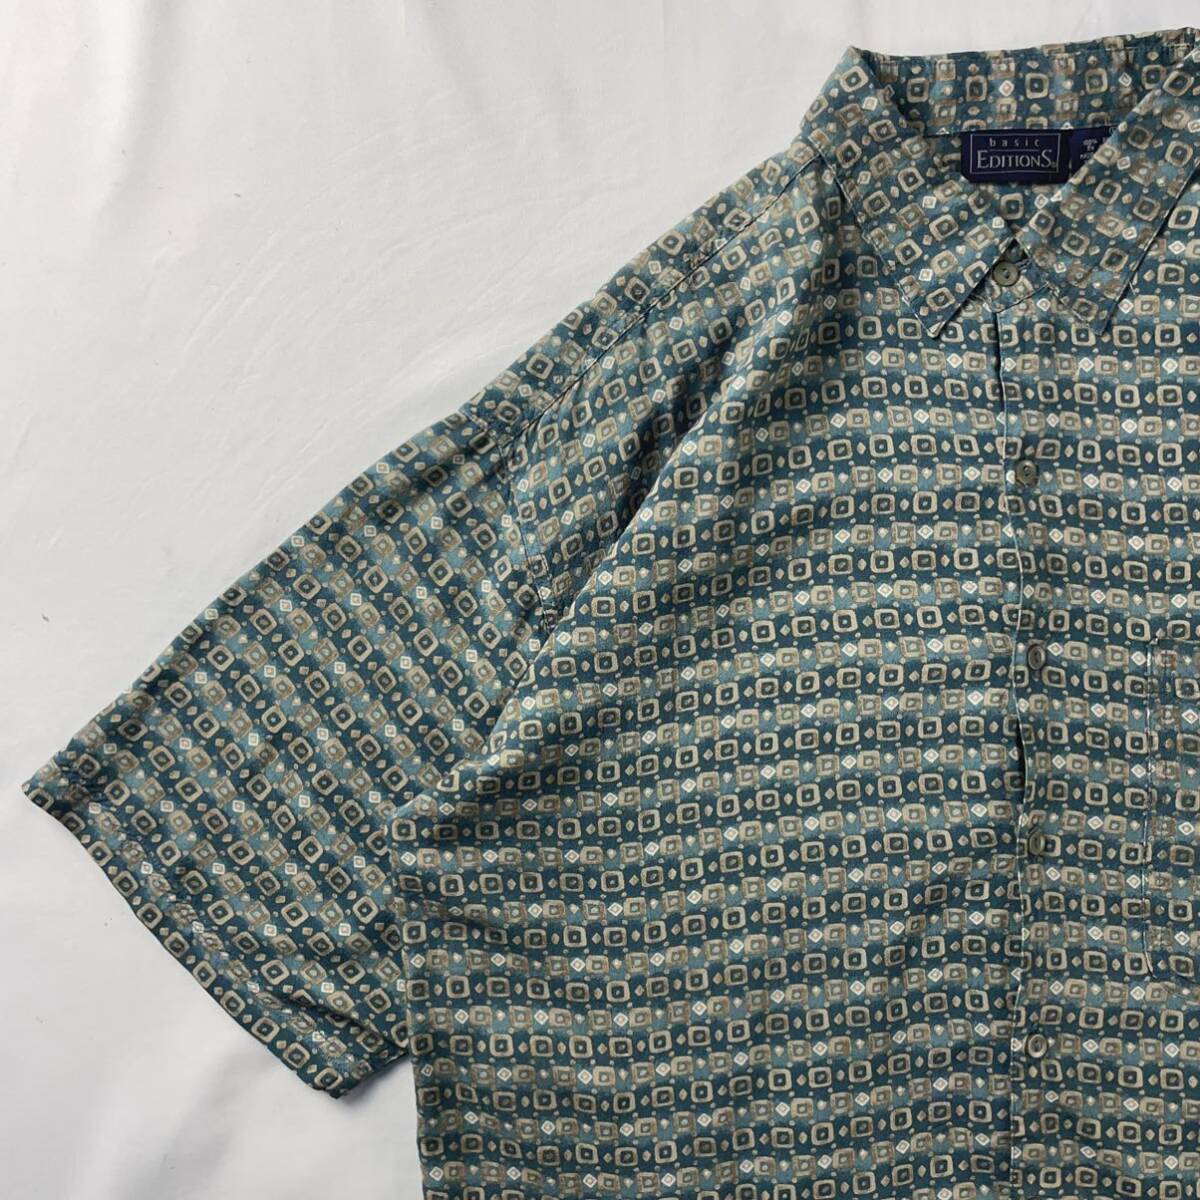 US Vintage 90s basic EDITIONS レーヨン100% くすみカラー エスニック 民族 幾何学模様 総柄 デザインシャツ 